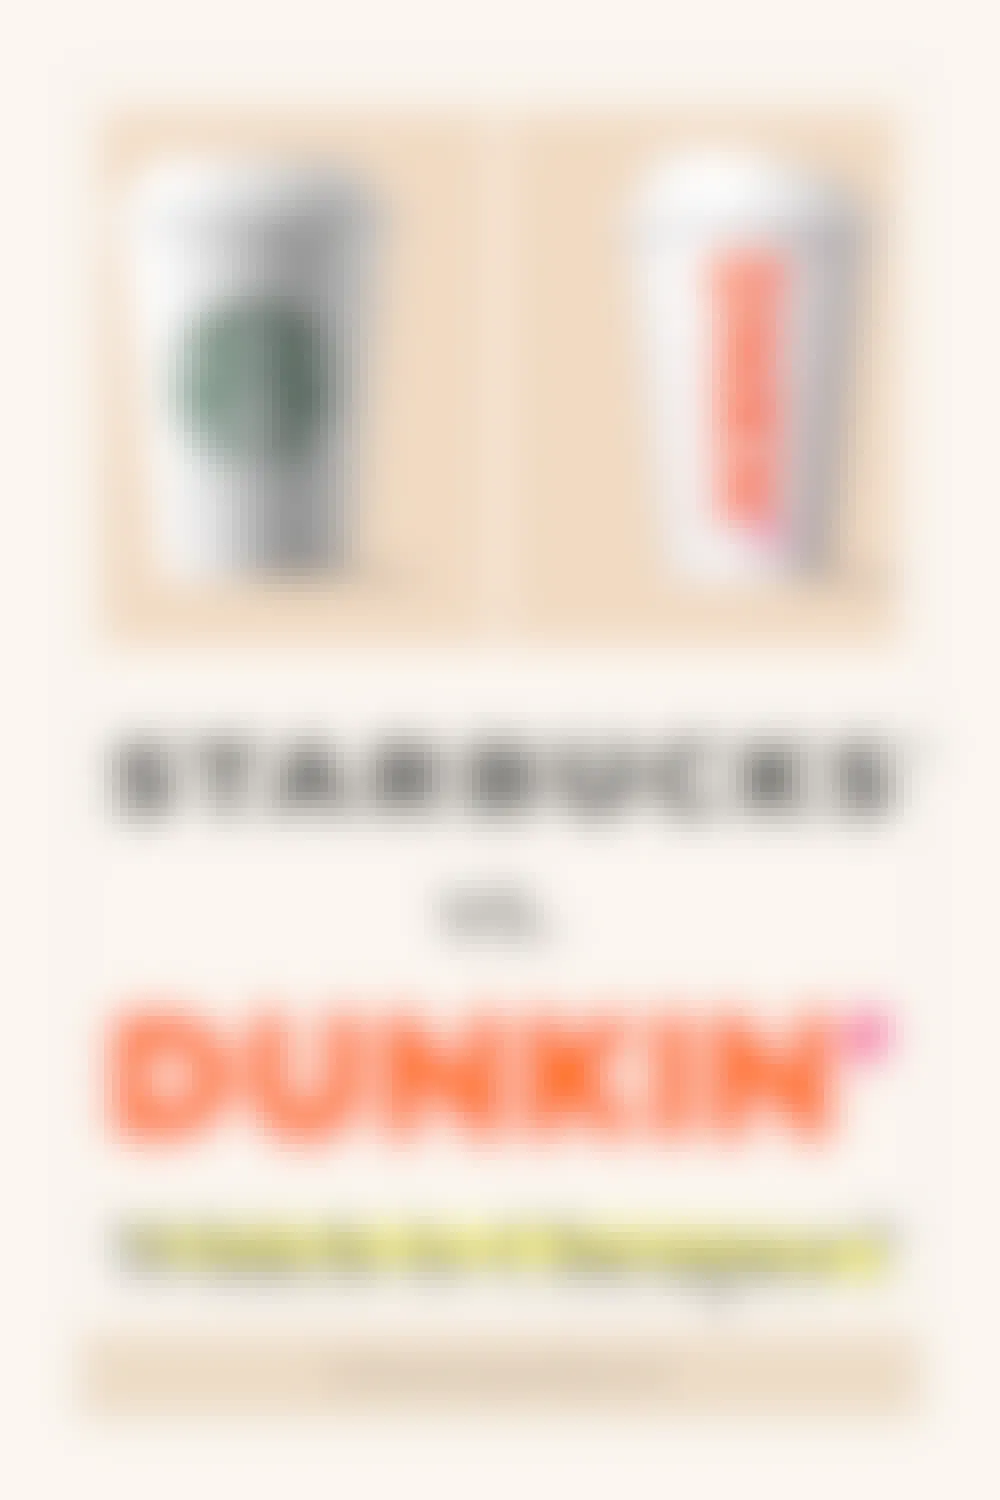 Starbucks vs Dunkin': Which is Cheaper?